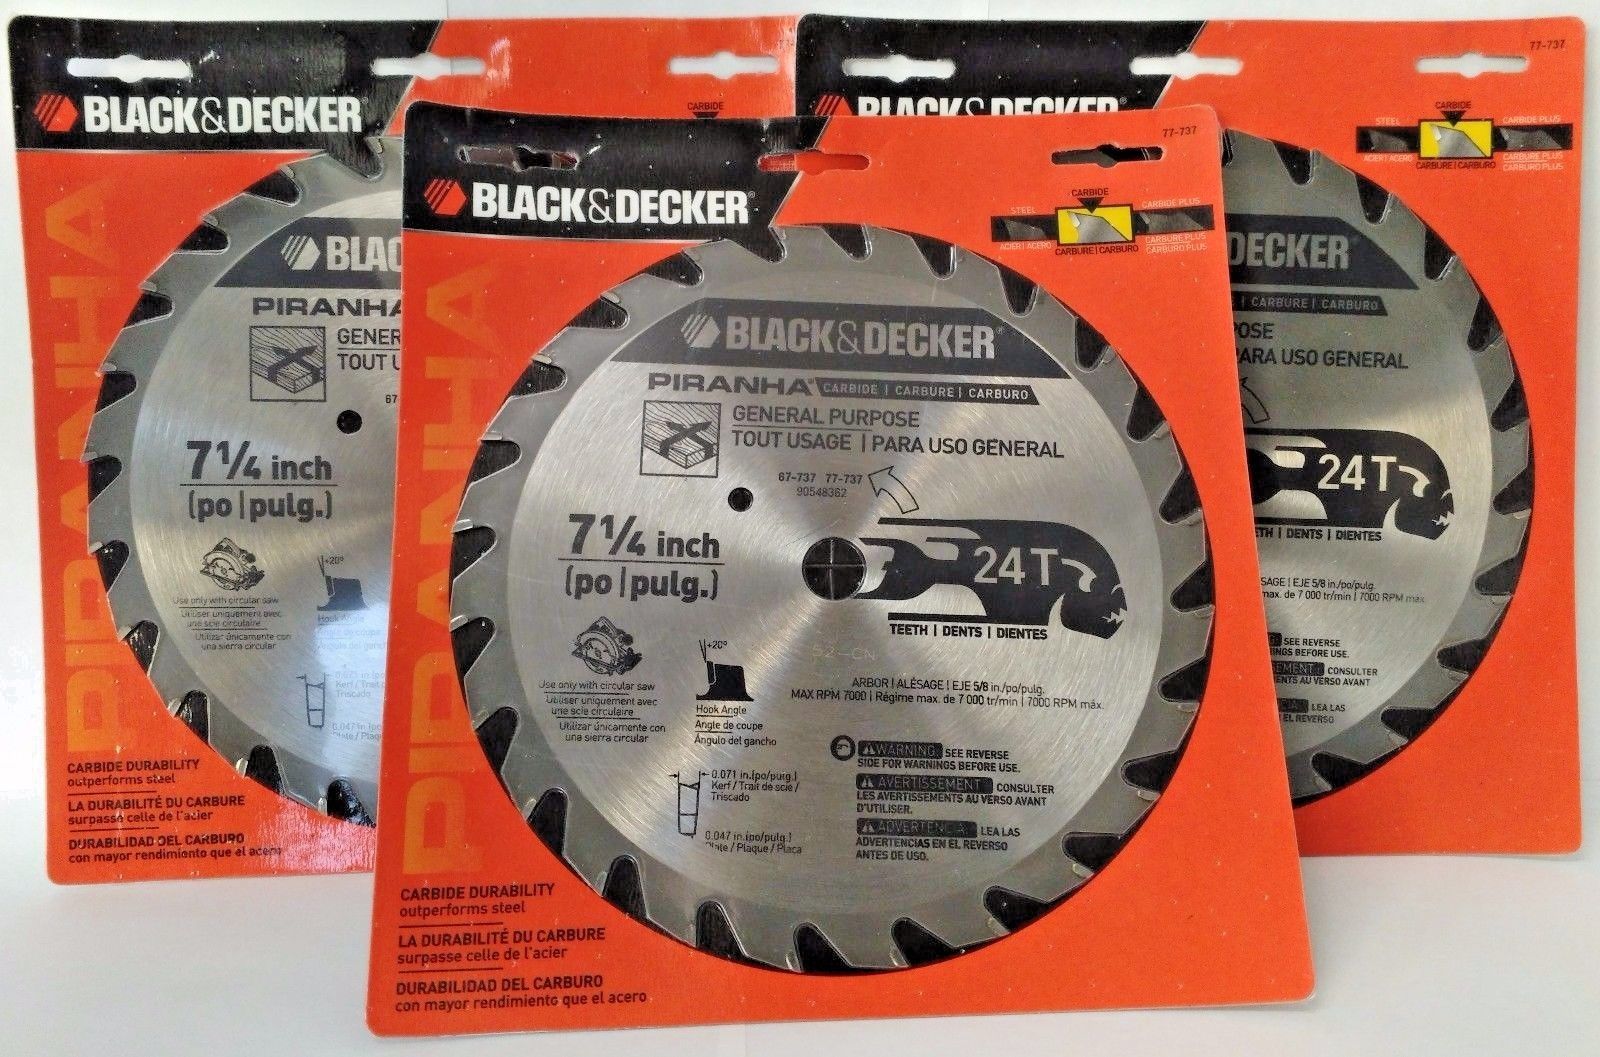 Black & Decker Piranha Circular Saw Blade 77-737, 7 1/4 in